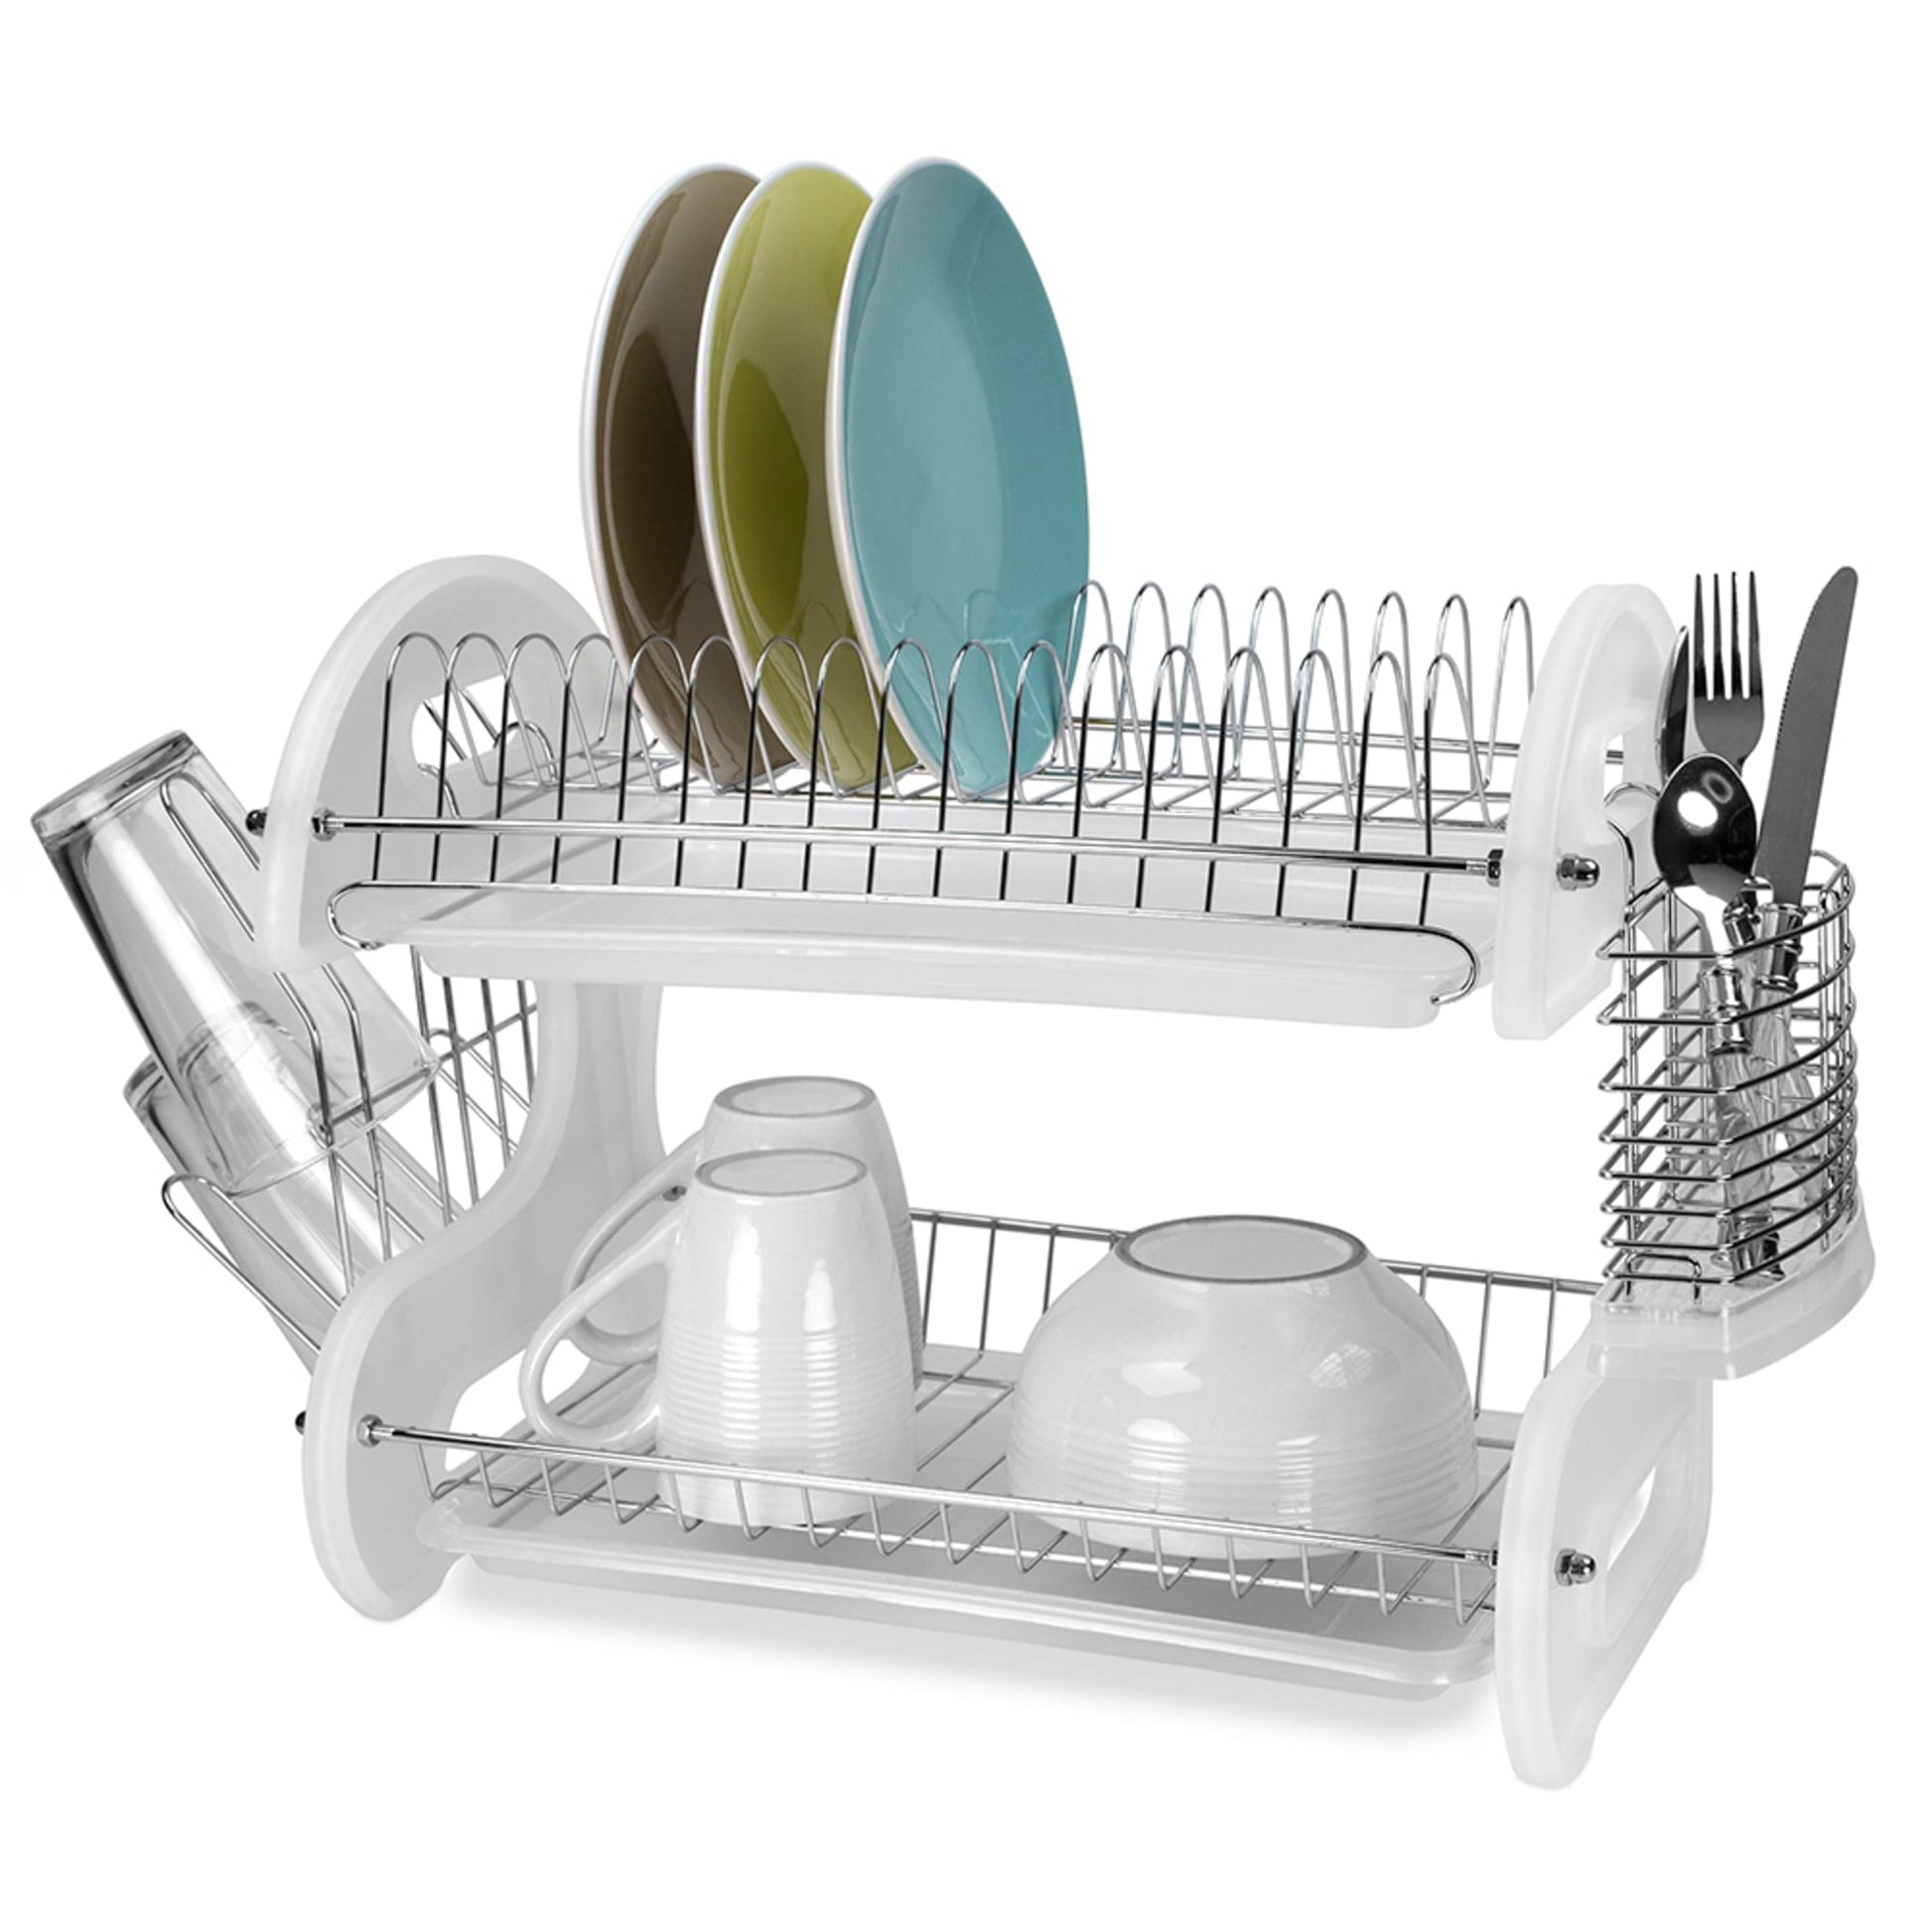 Home Basics 2 Tier Plastic Dish Drainer, Turquoise, KITCHEN ORGANIZATION